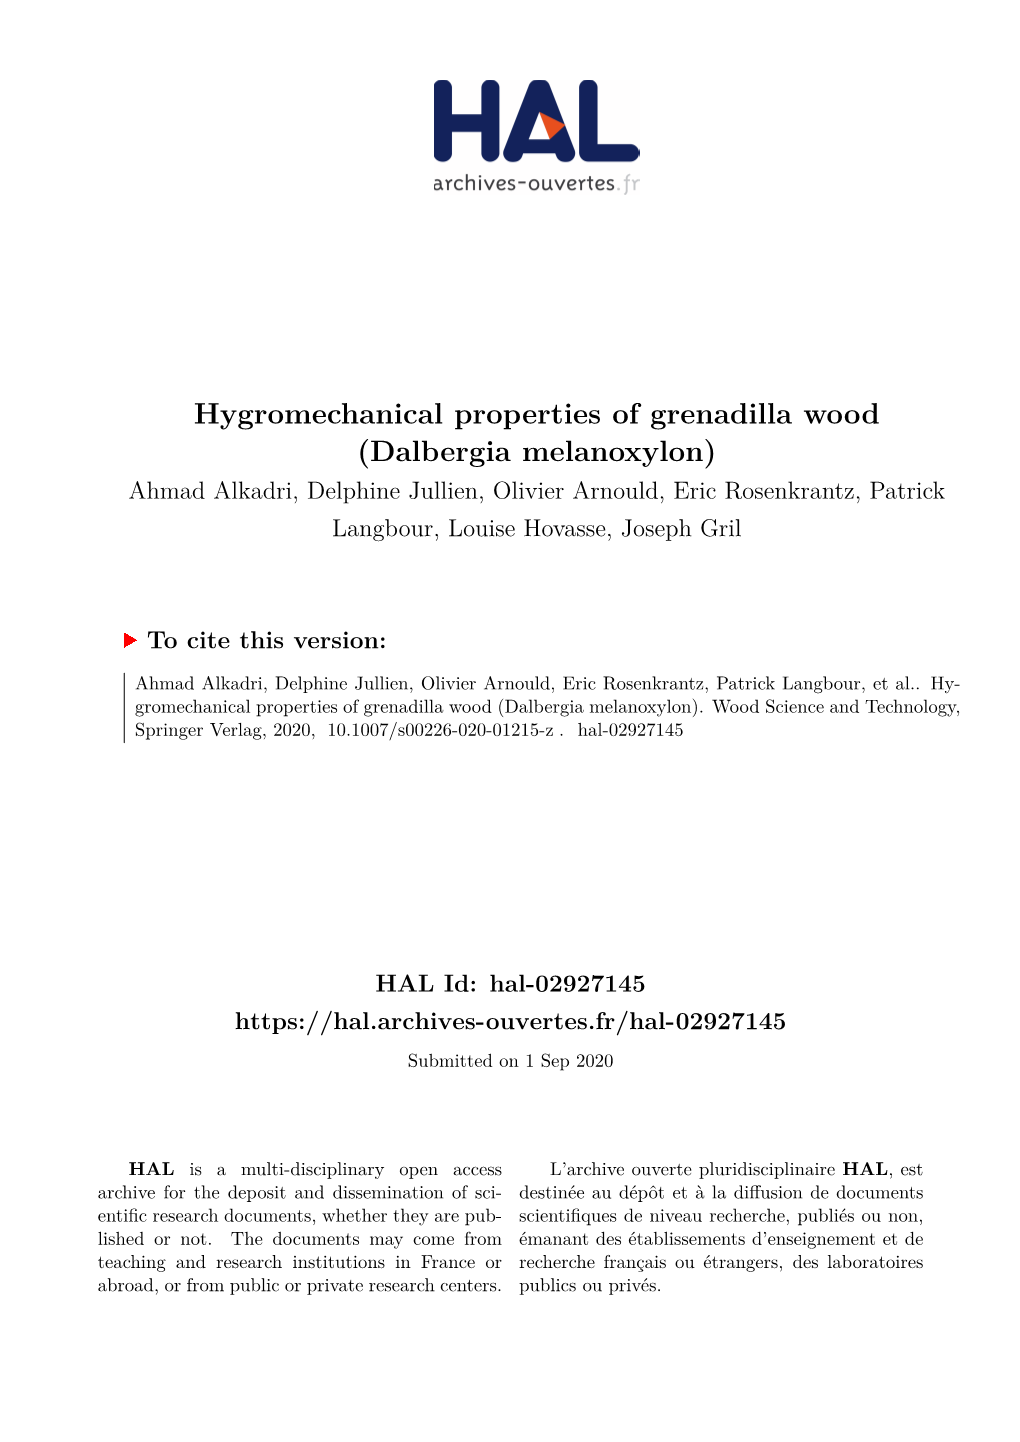 Hygromechanical Properties of Grenadilla Wood (Dalbergia